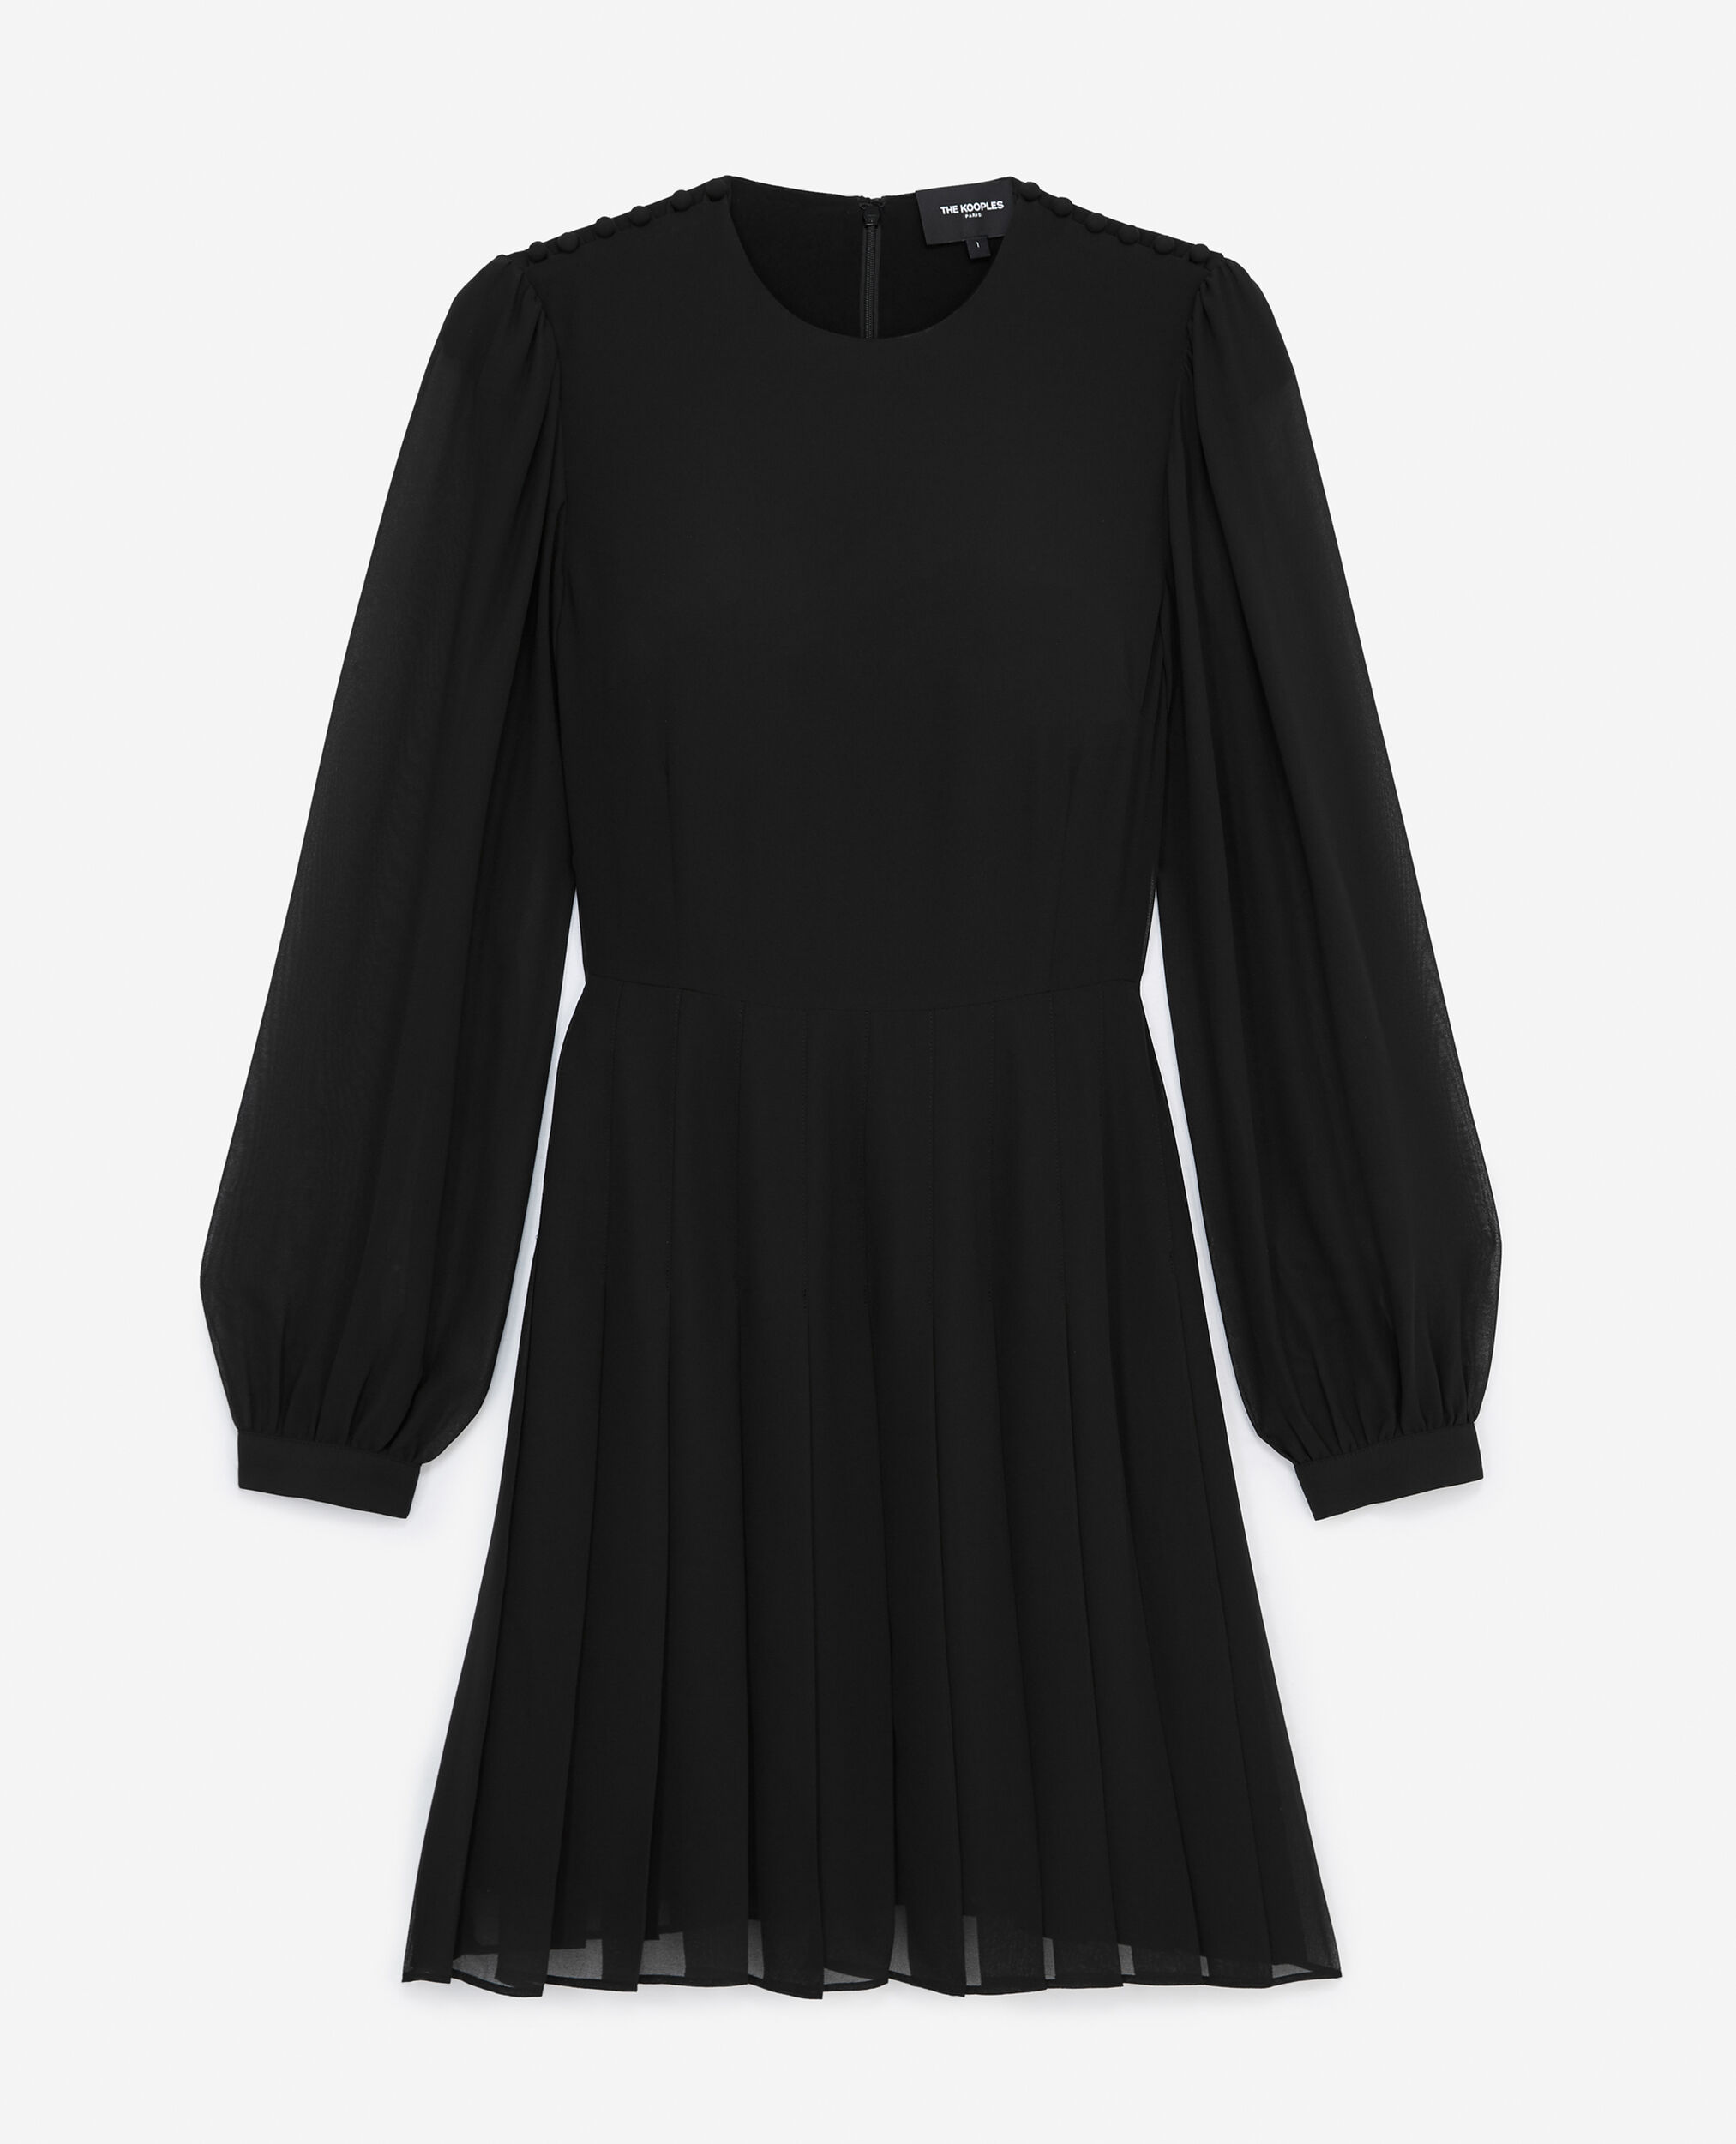 Kurzes Kleid schwarz plissiert Schulterknöpfe, BLACK, hi-res image number null